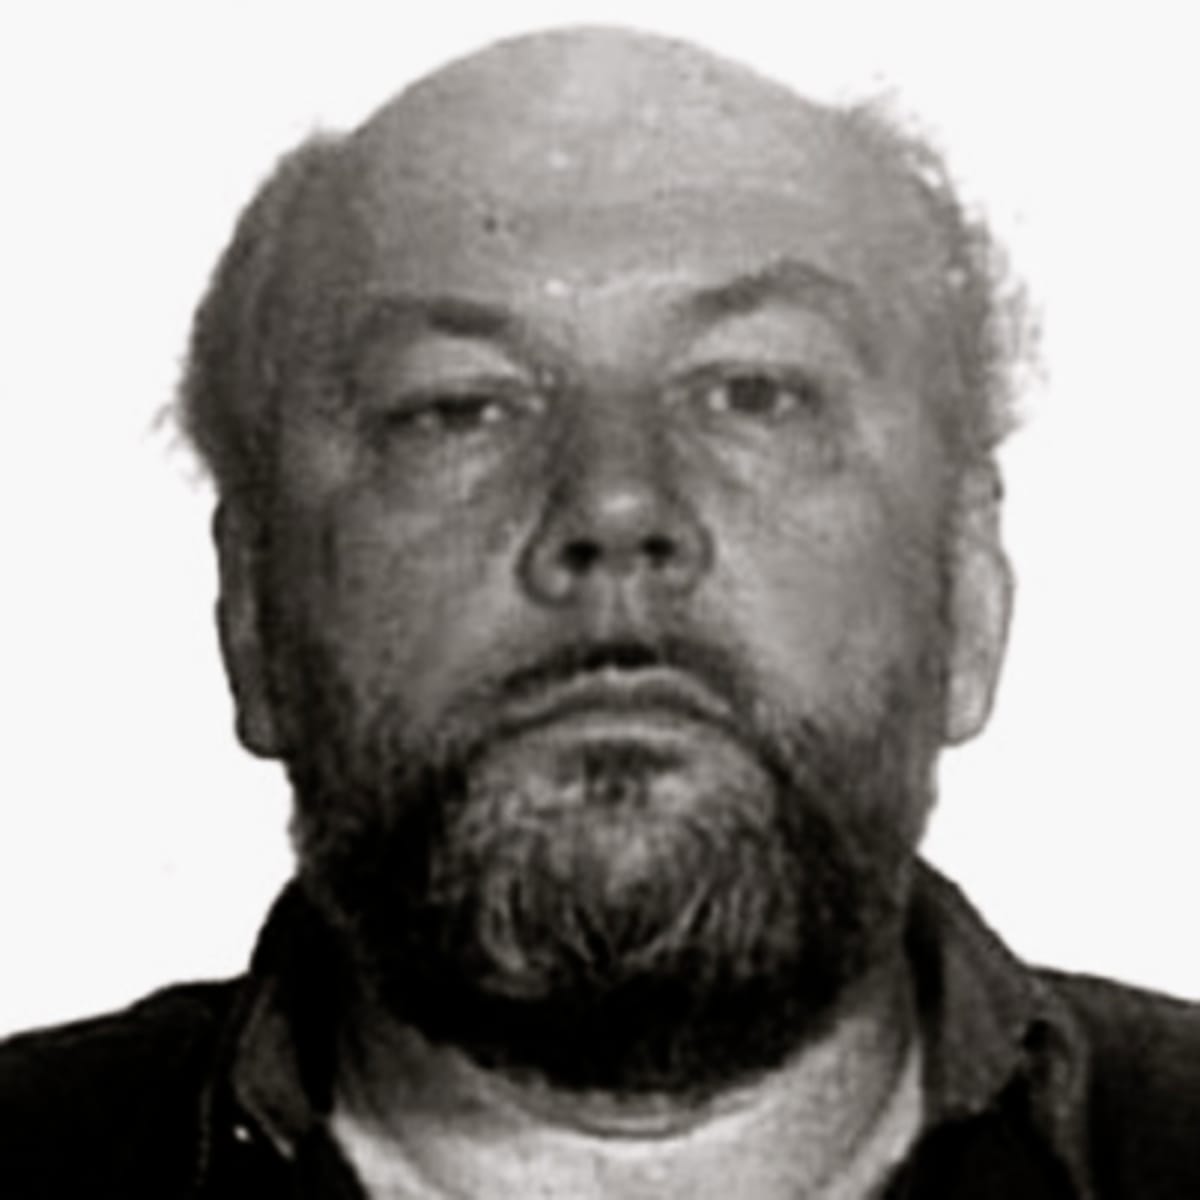 serial killer hitman richard kuklinski the iceman documentary